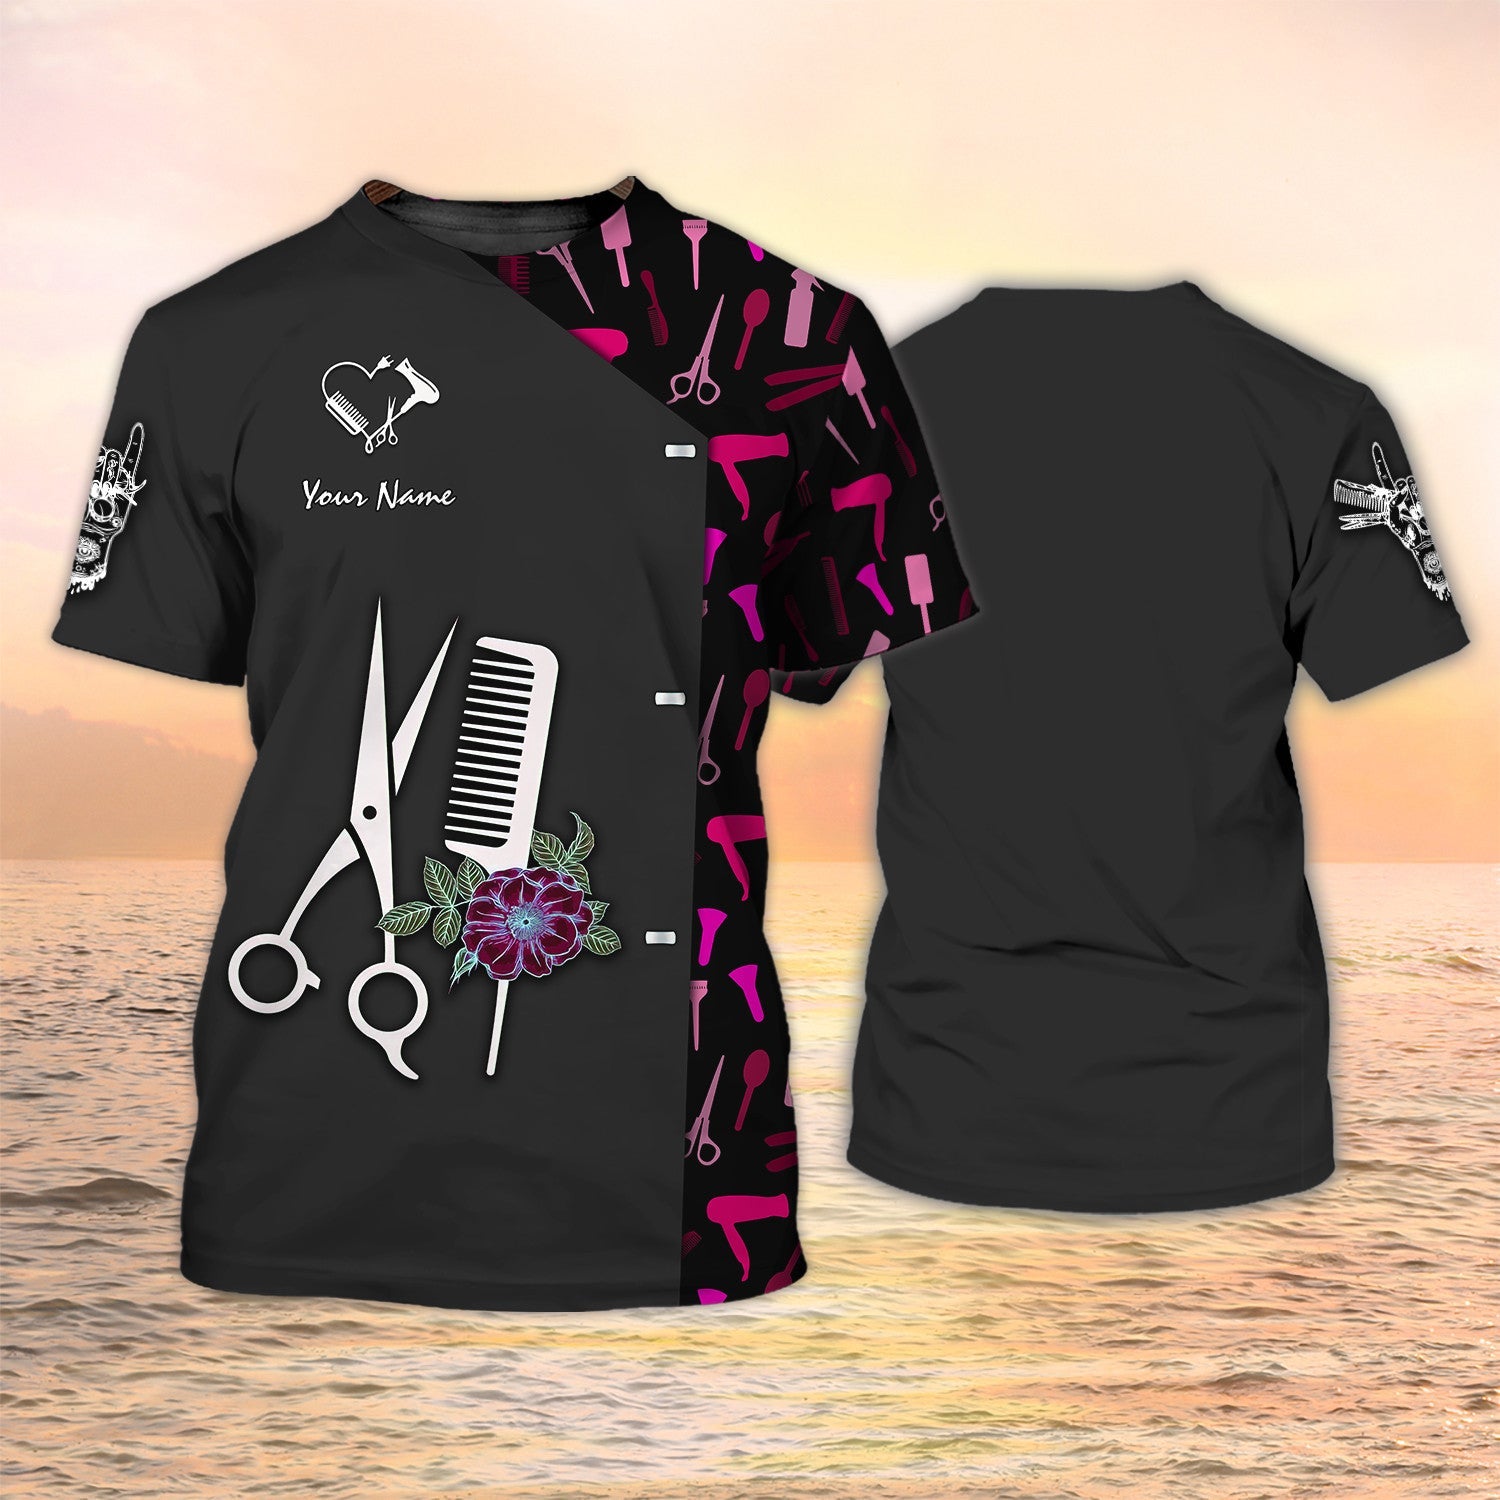 Hairdresser Shirts Barber Tools Design Shirts Hairstylist 3D Tshirt Custom Hair Salon Uniform Black Pink